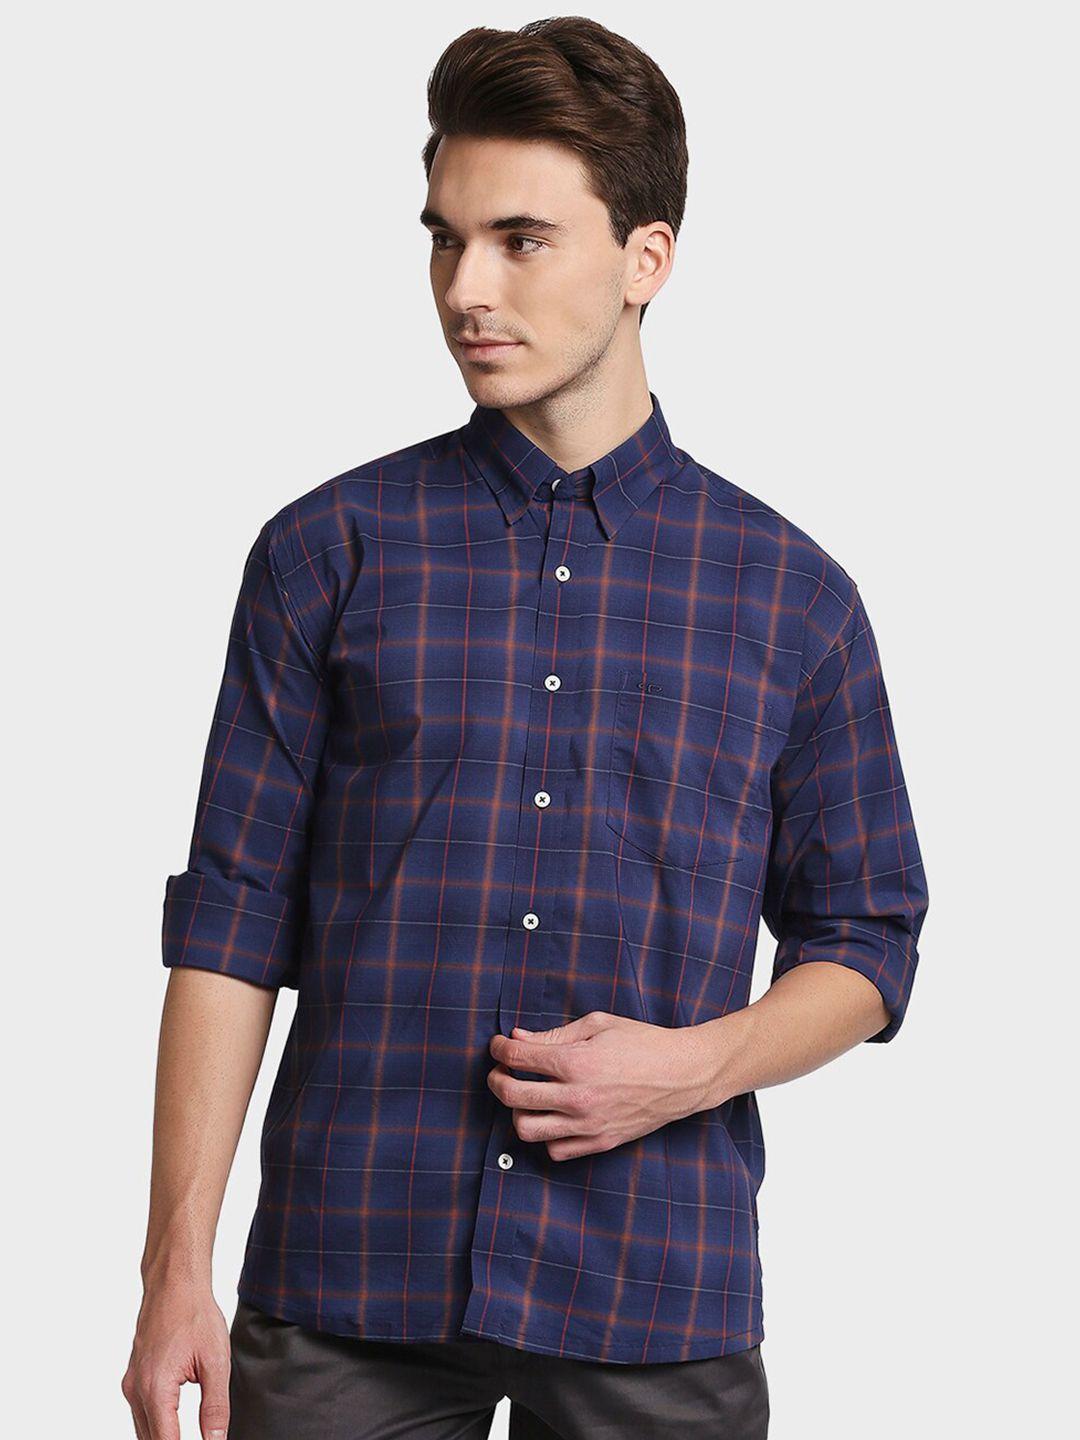 colorplus-men-blue-tartan-checks-opaque-checked-casual-shirt